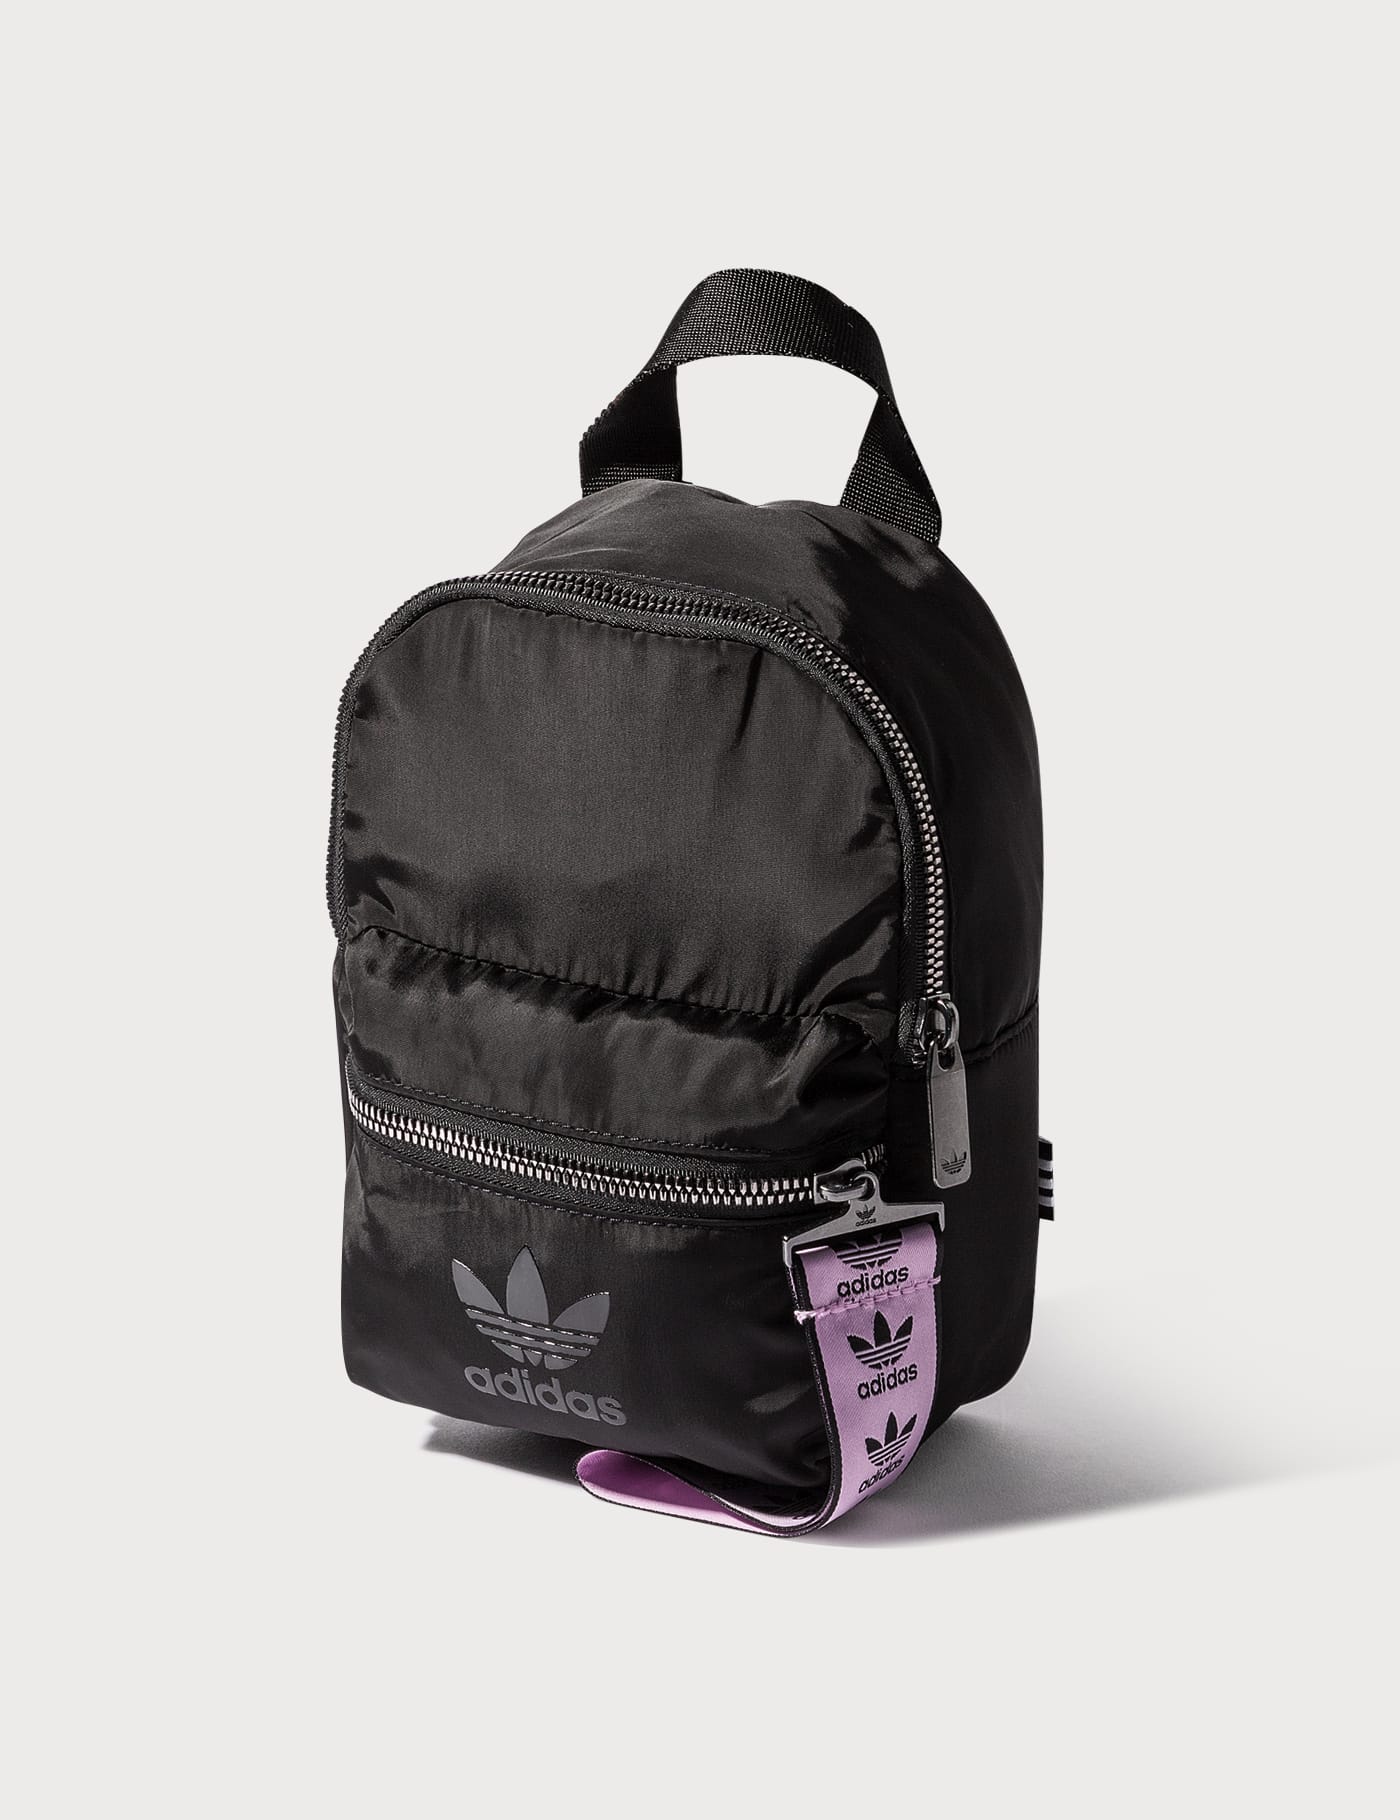 adidas originals trefoil logo mini backpack in black and lilac